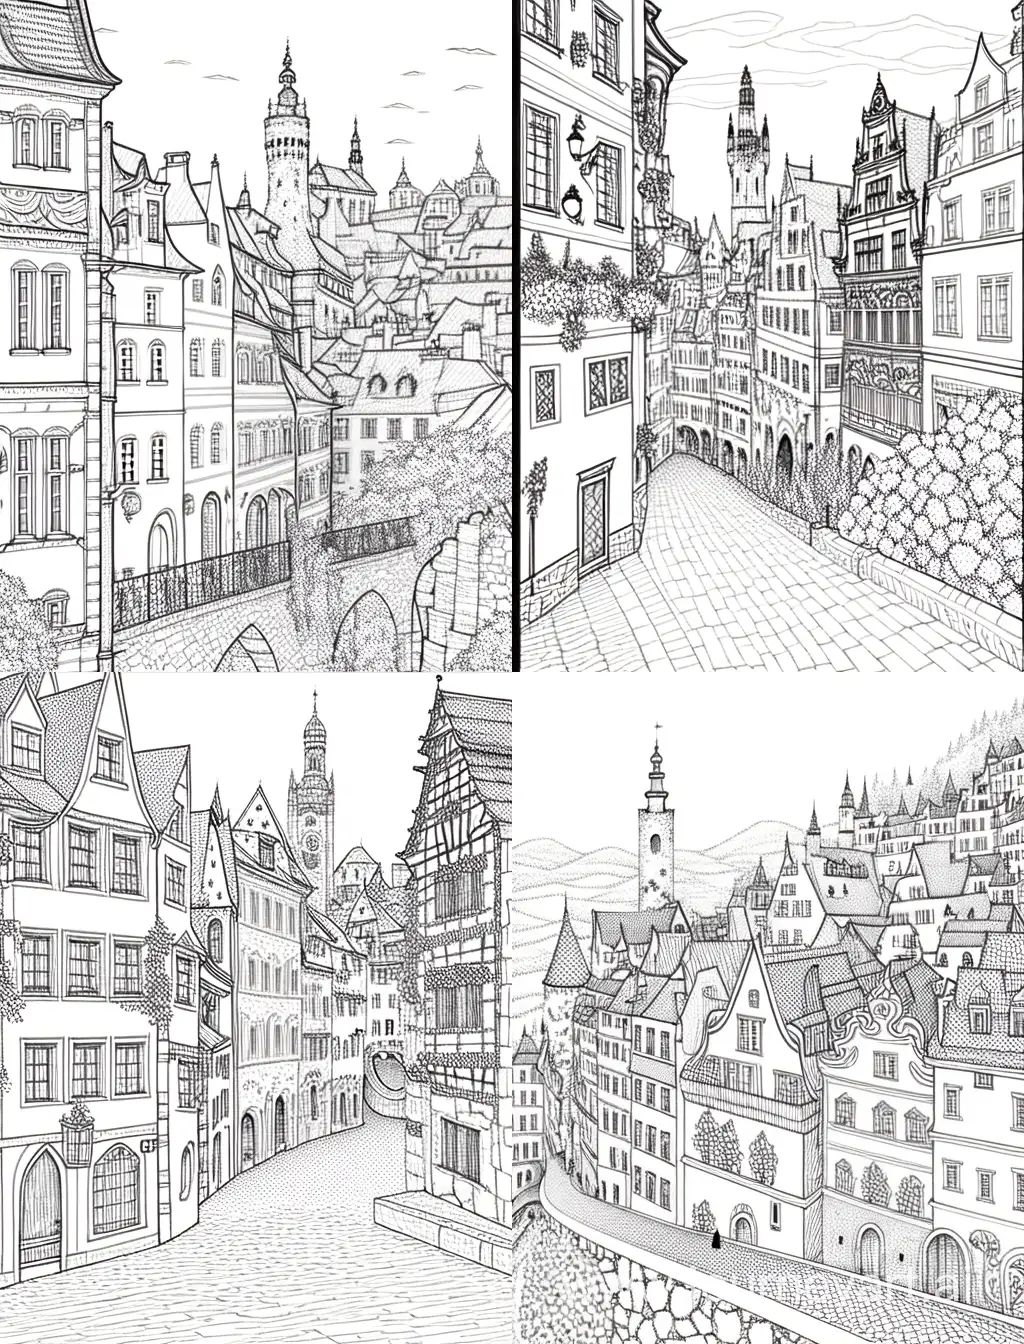  пейзаж в стиле зентангл раскраска, старый город в Европе, лайн-арт